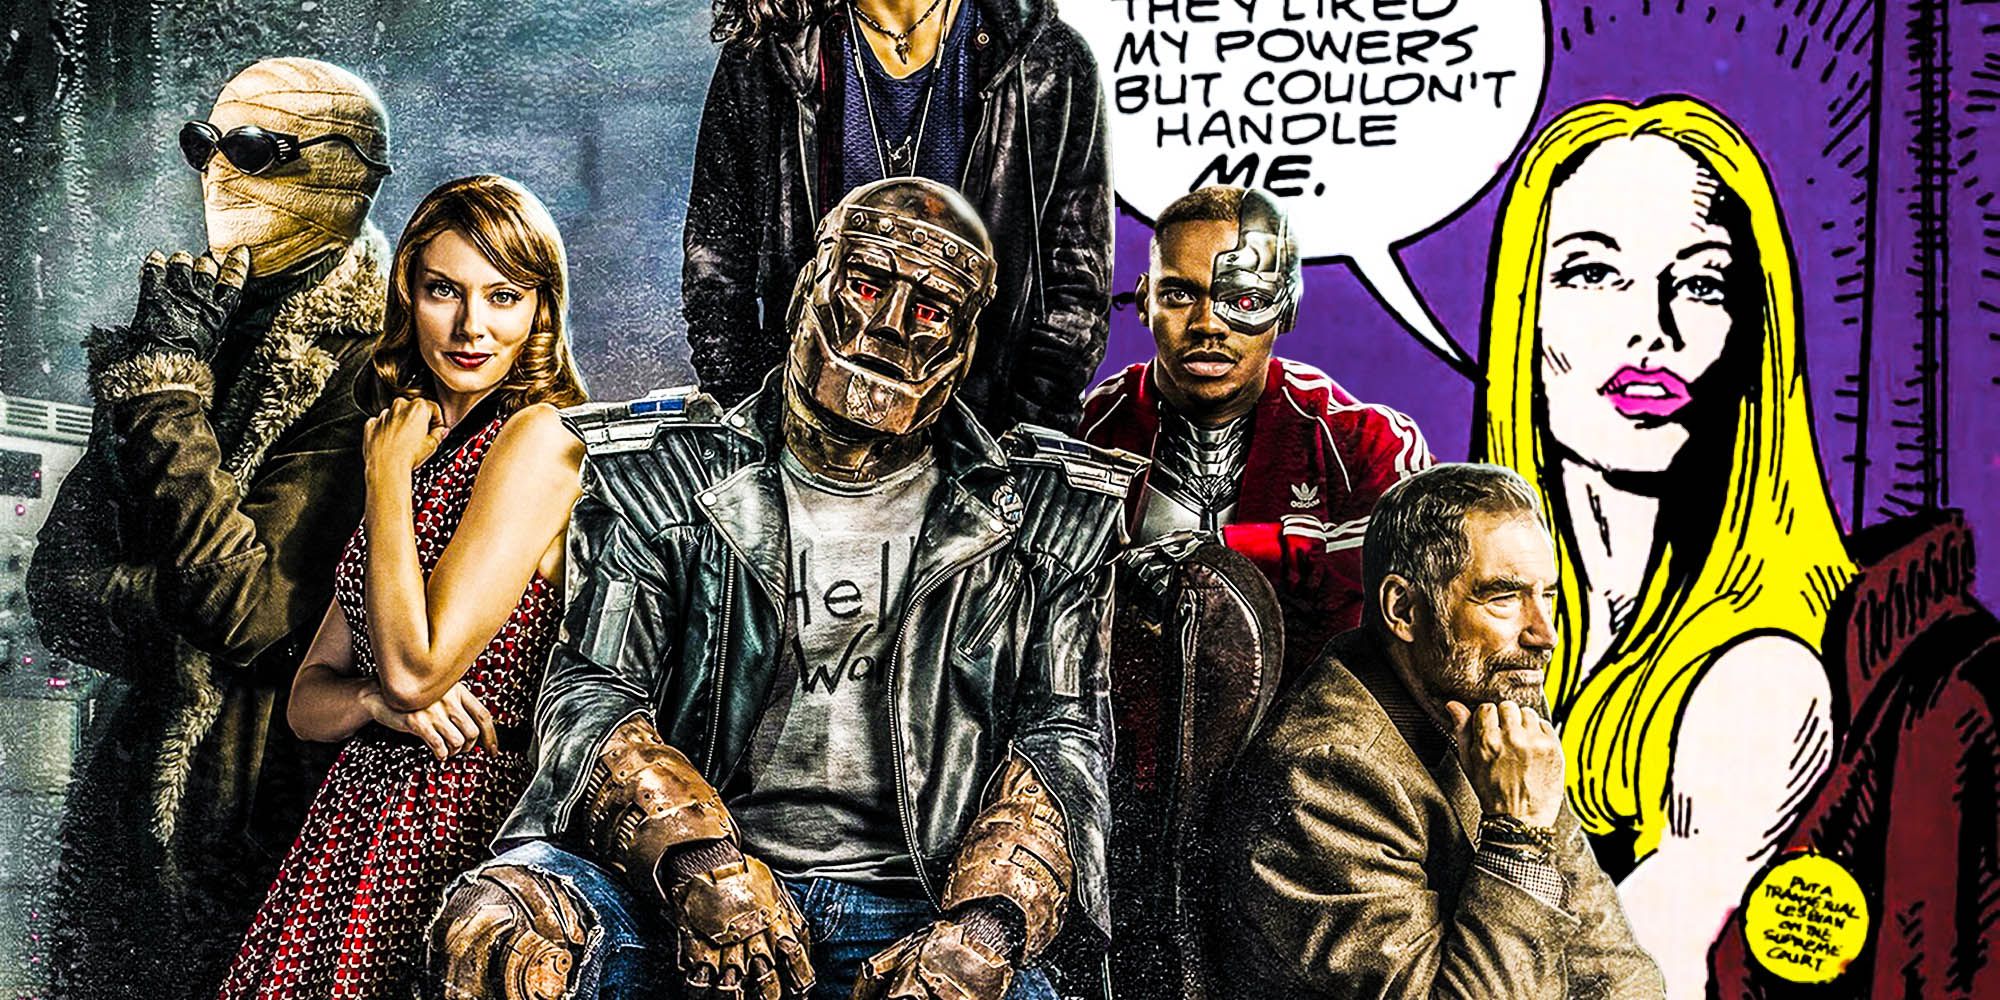 Doom patrol introduce DC first transgender super hero coagula